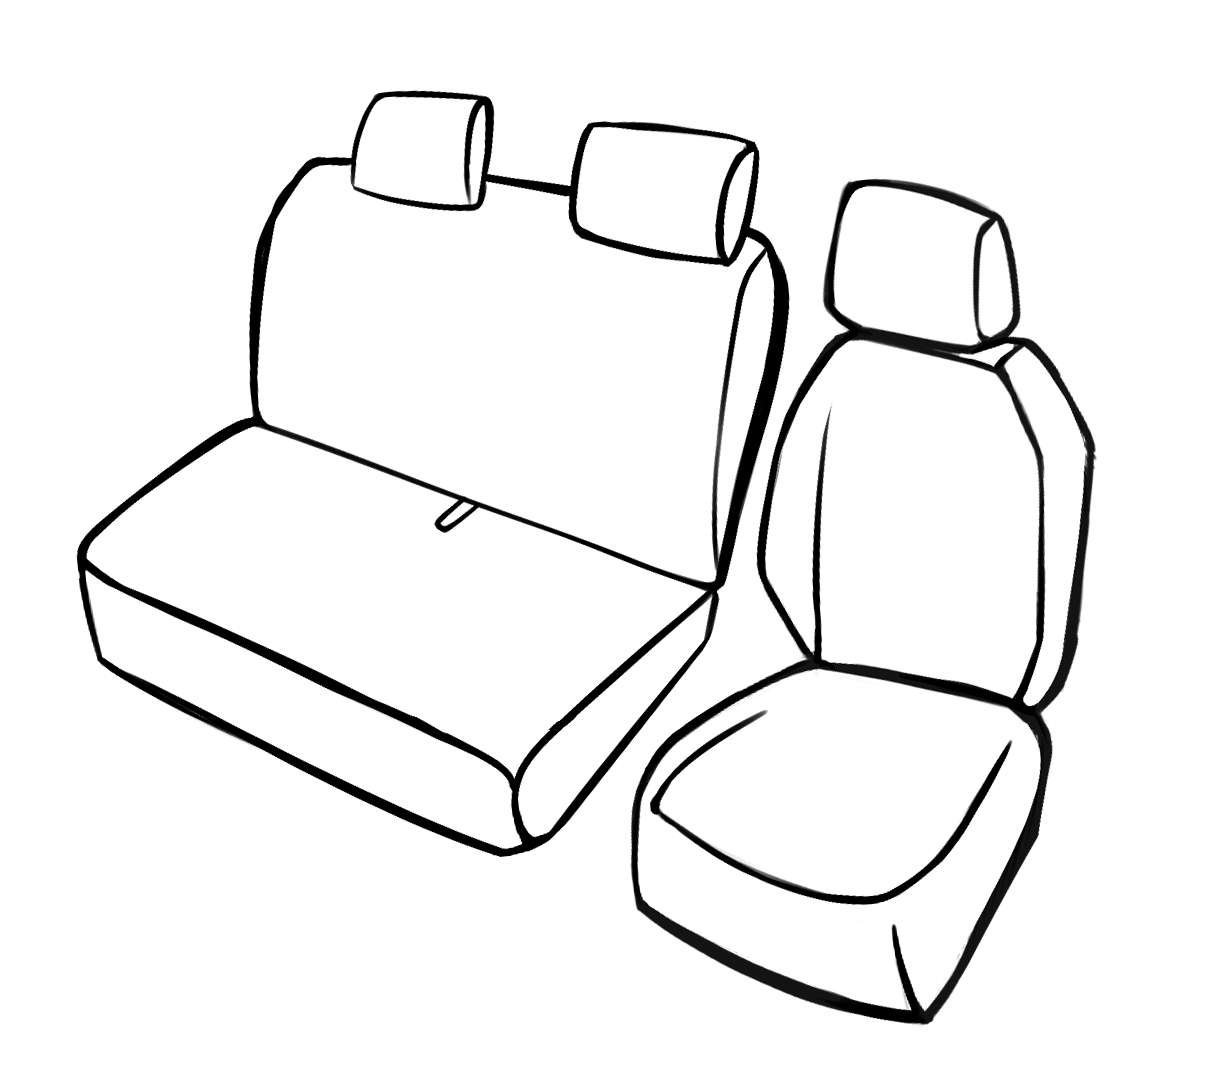 Passform Sitzbezug aus Stoff kompatibel mit Opel Vivaro, Renault Traffic, Einzel & Doppelbank